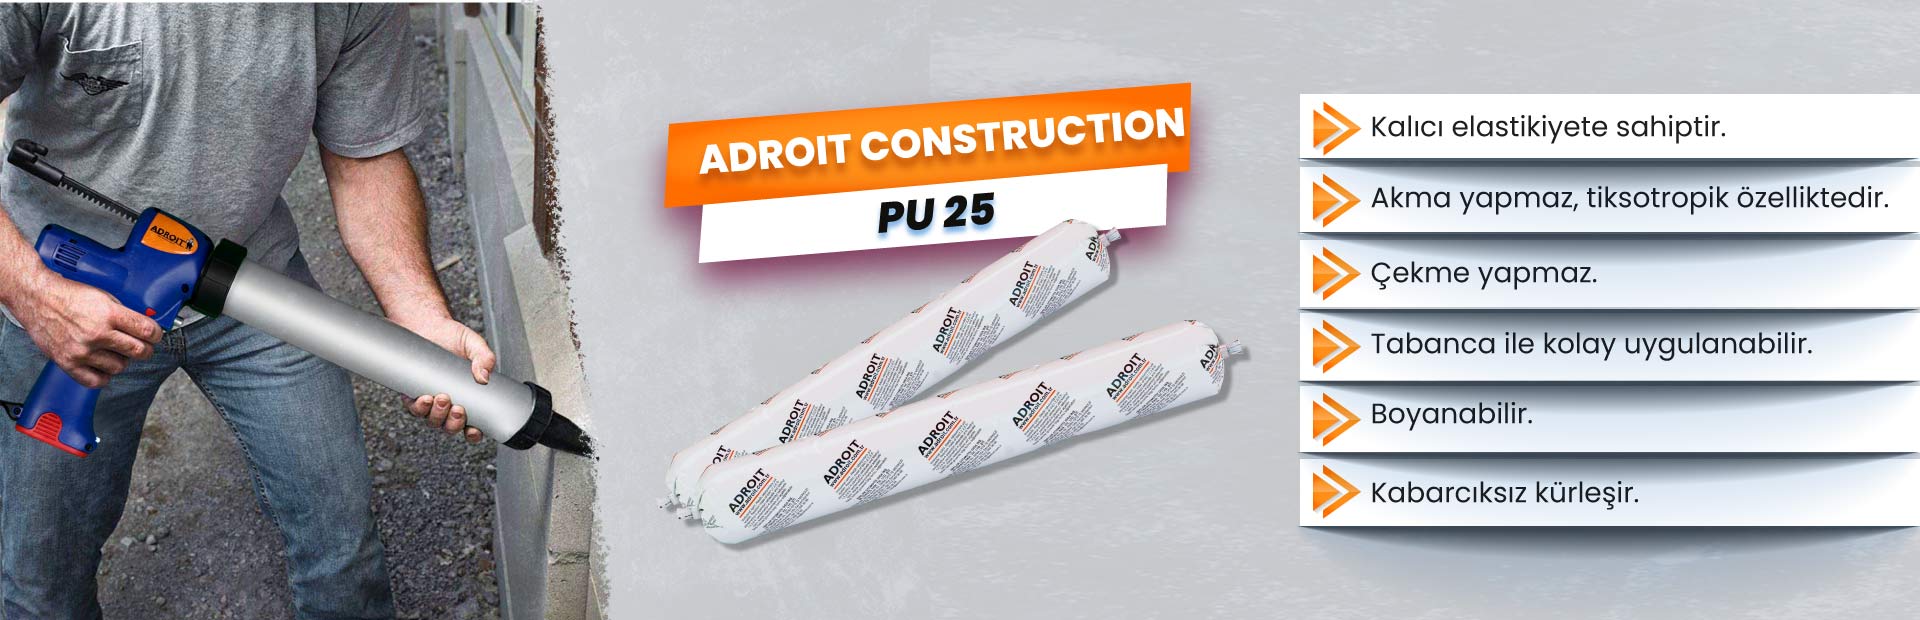 Adroit Construction Pu 25